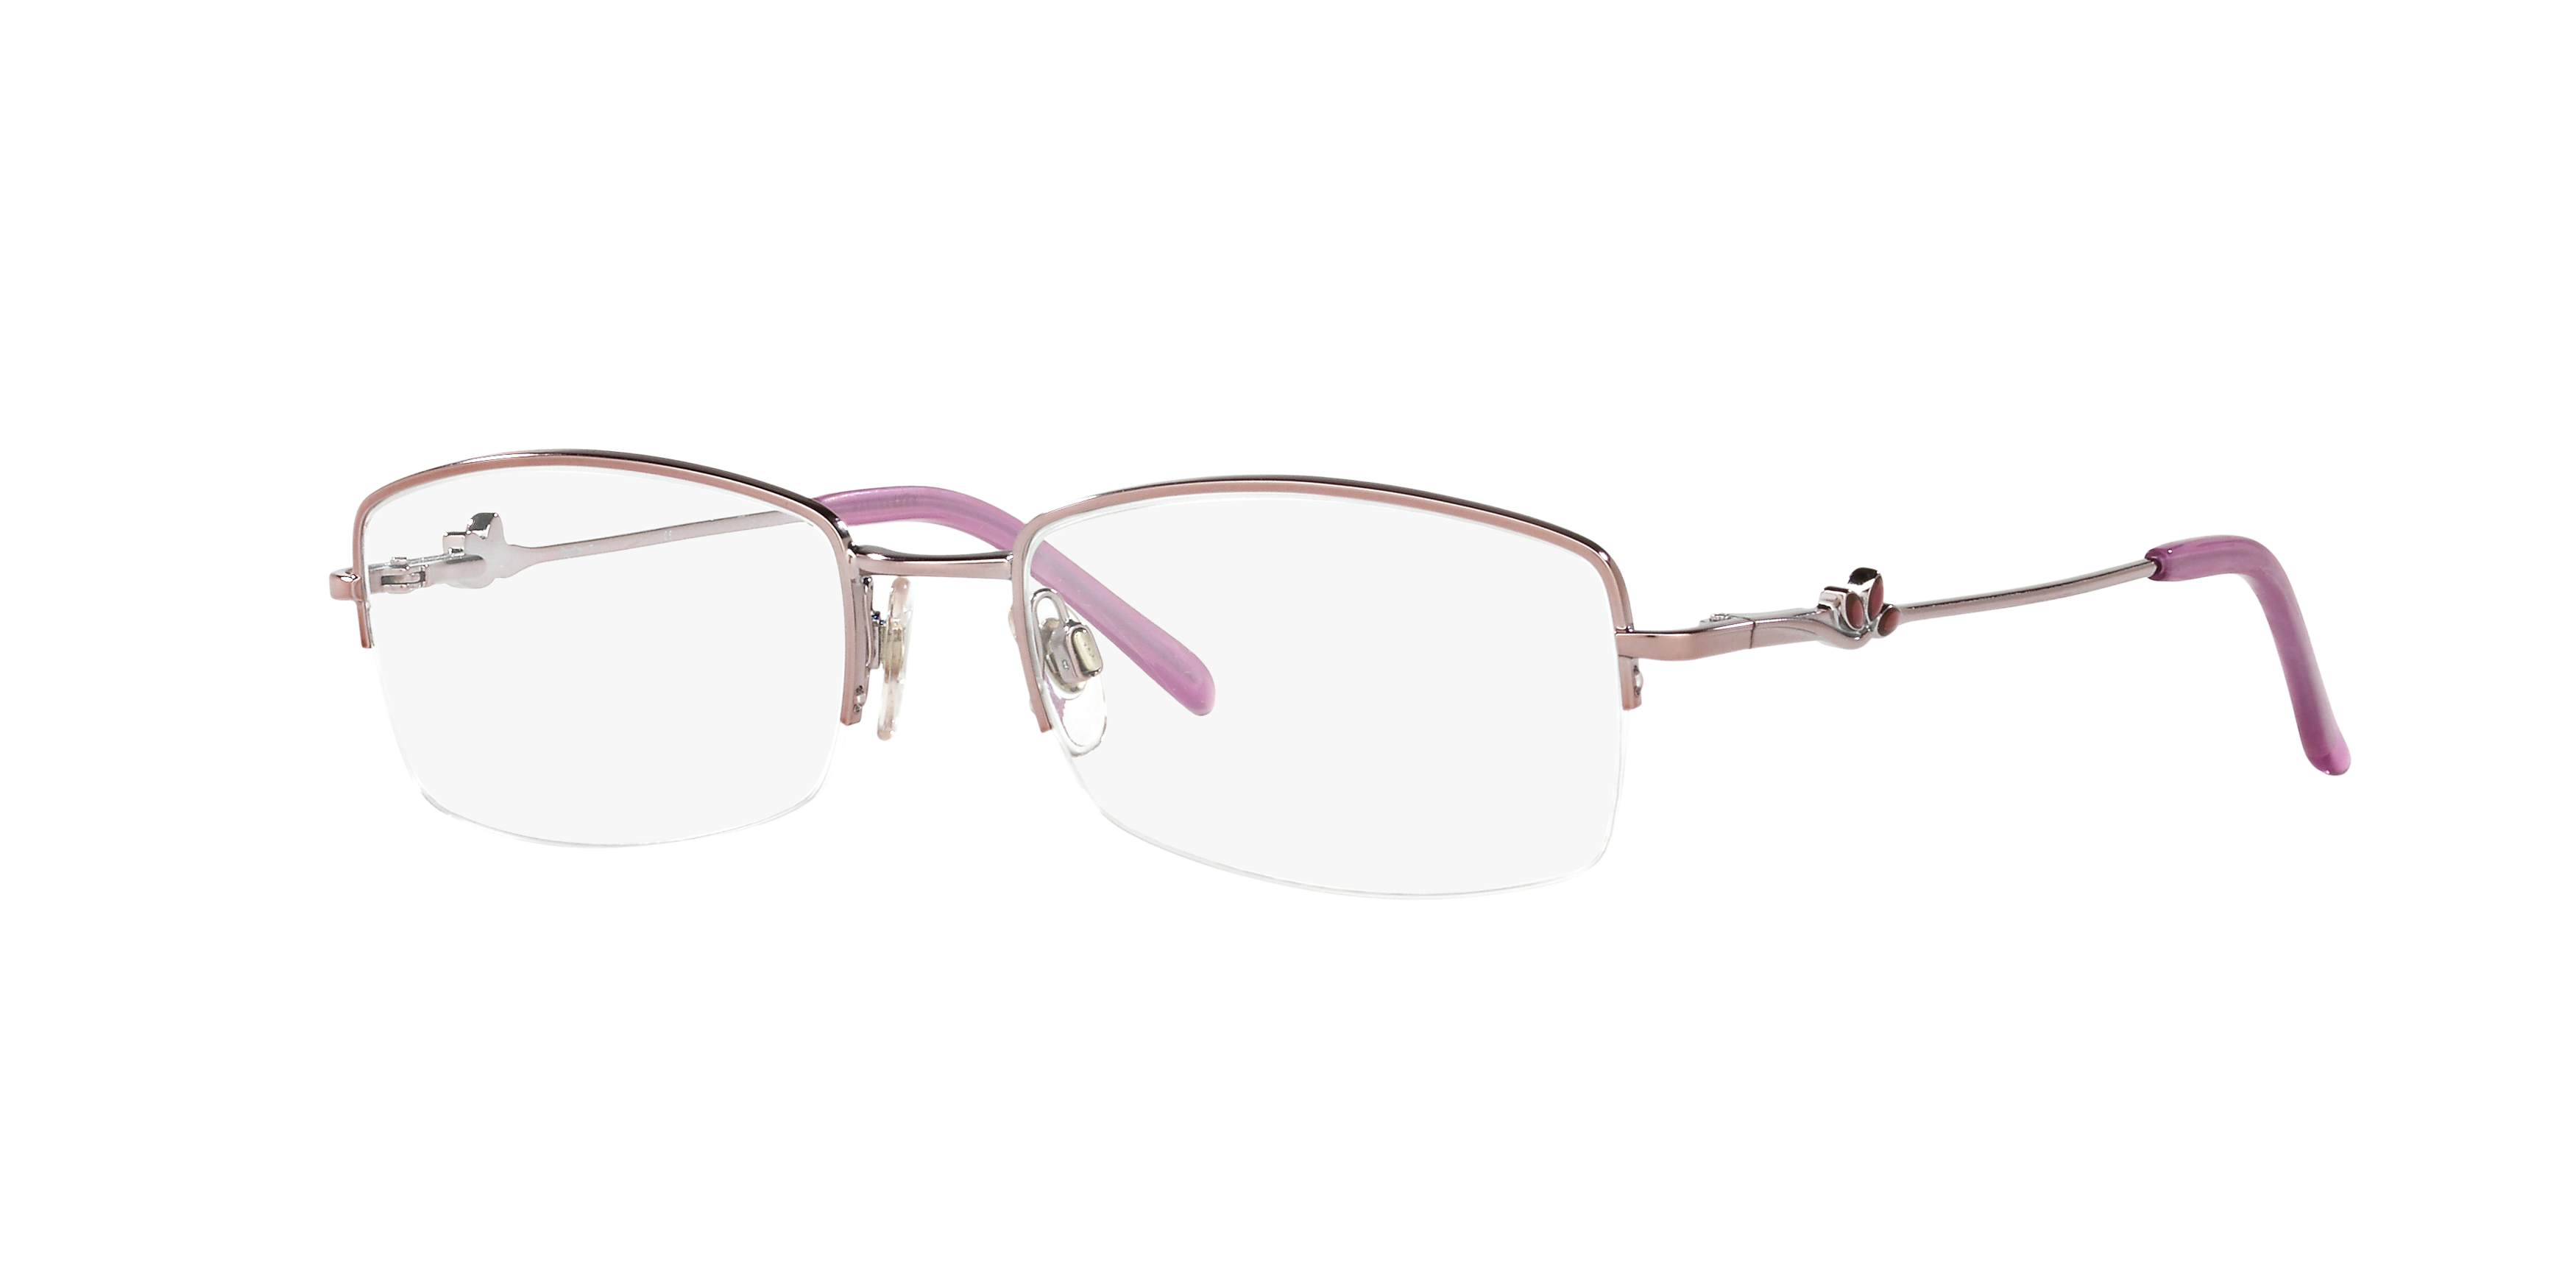 Angle_Left01 Sferoflex SF 2553 (229) Glasses Transparent / Pink